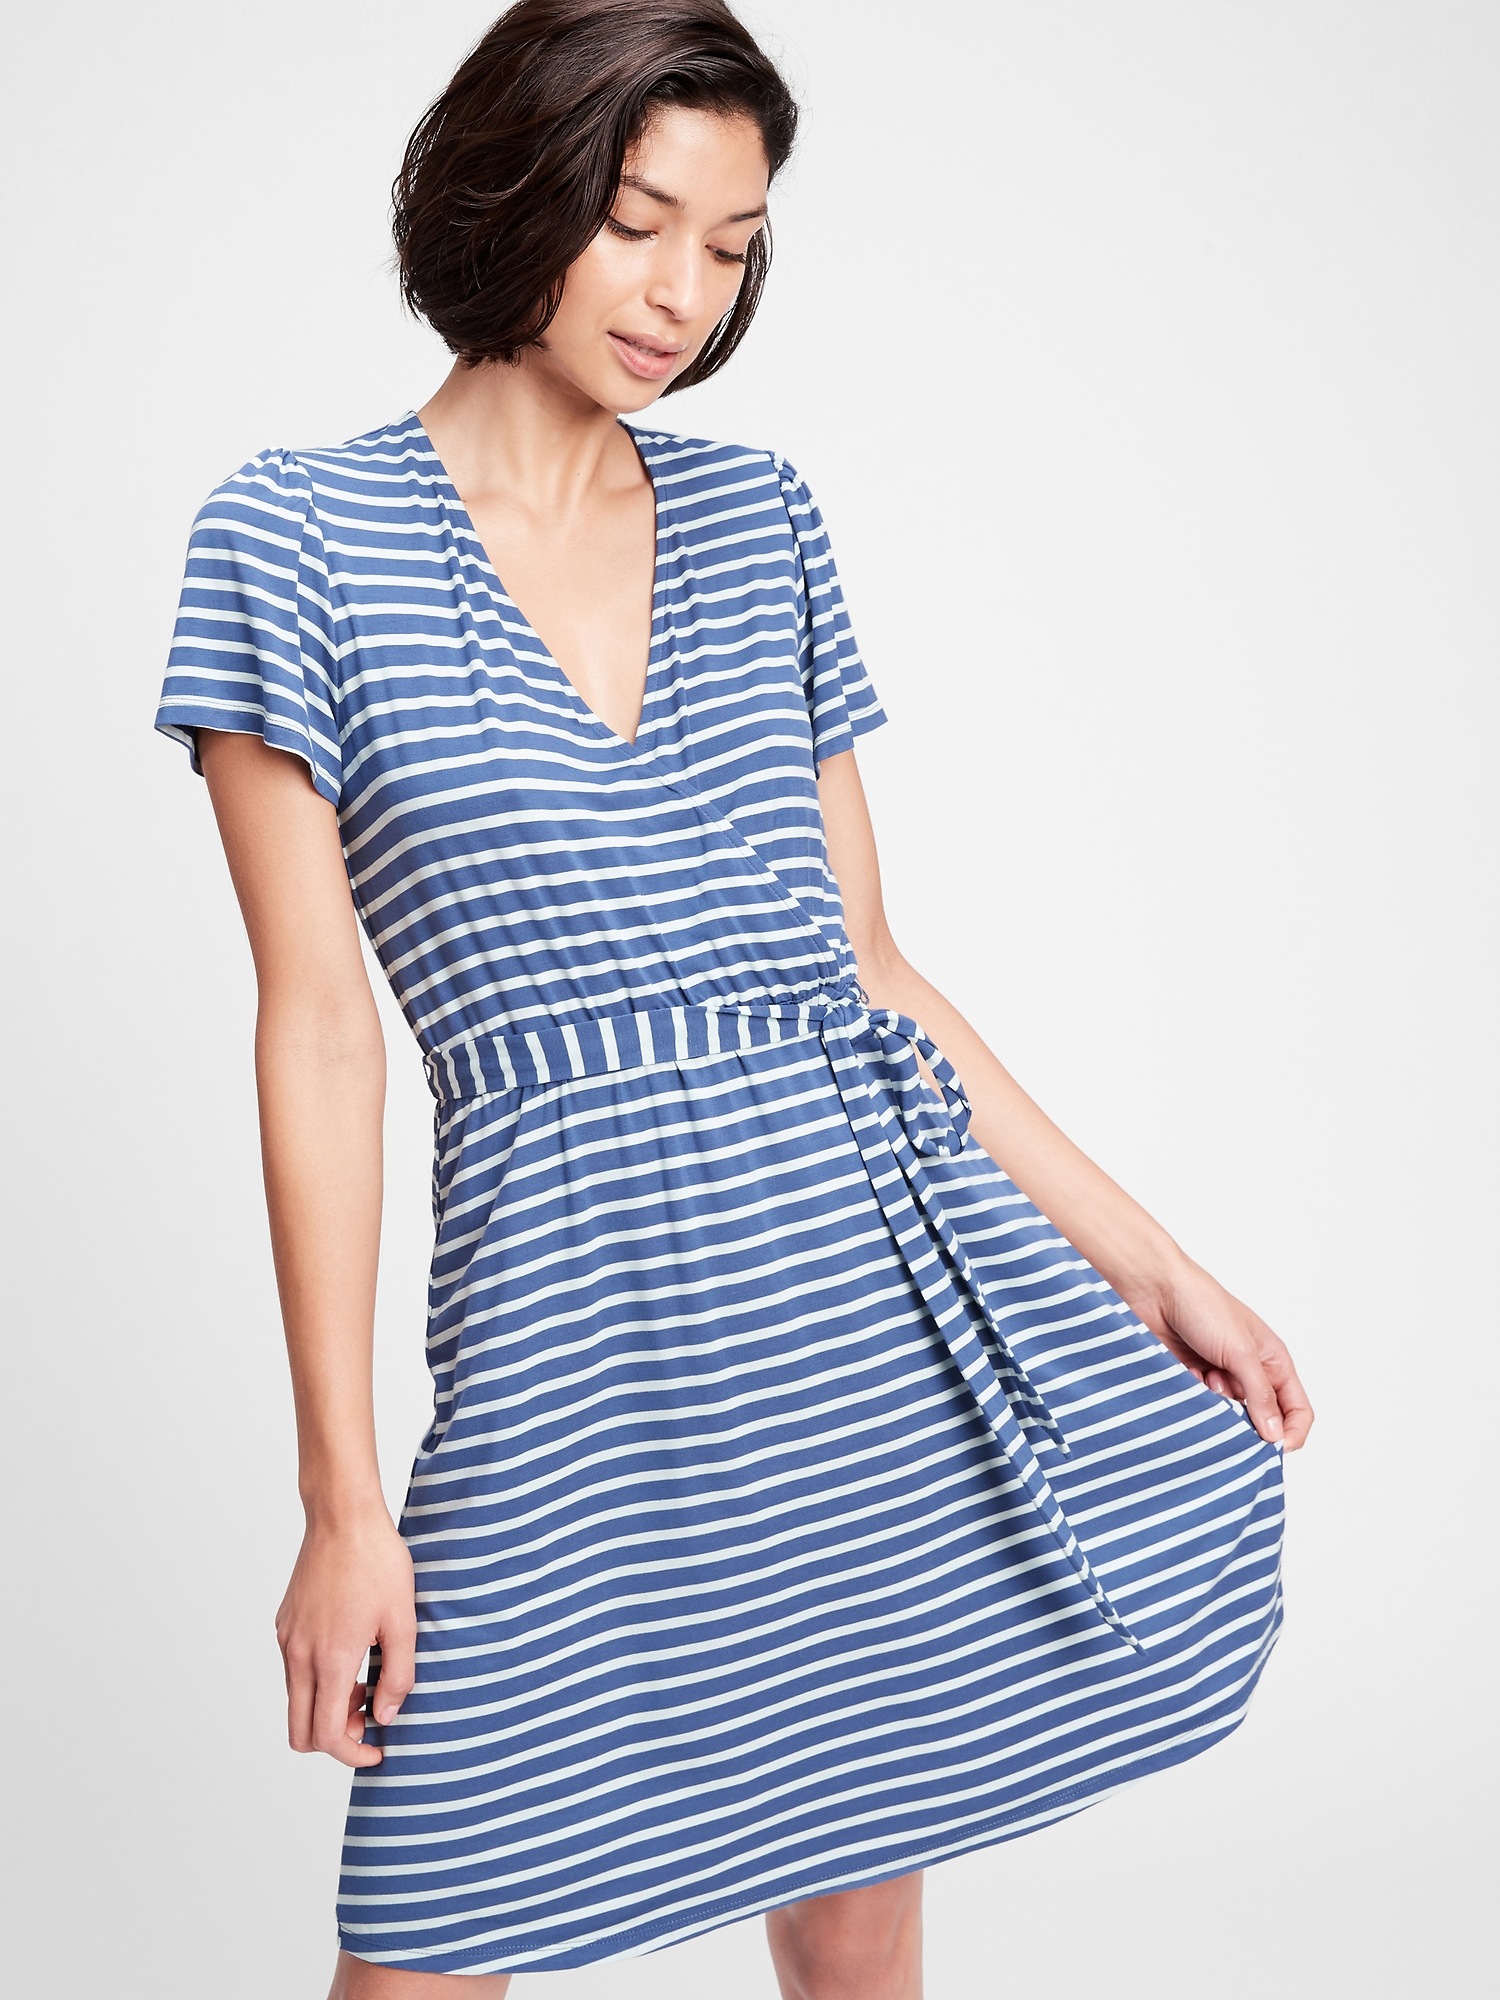 Short Sleeve Wrap Dress | Gap Factory